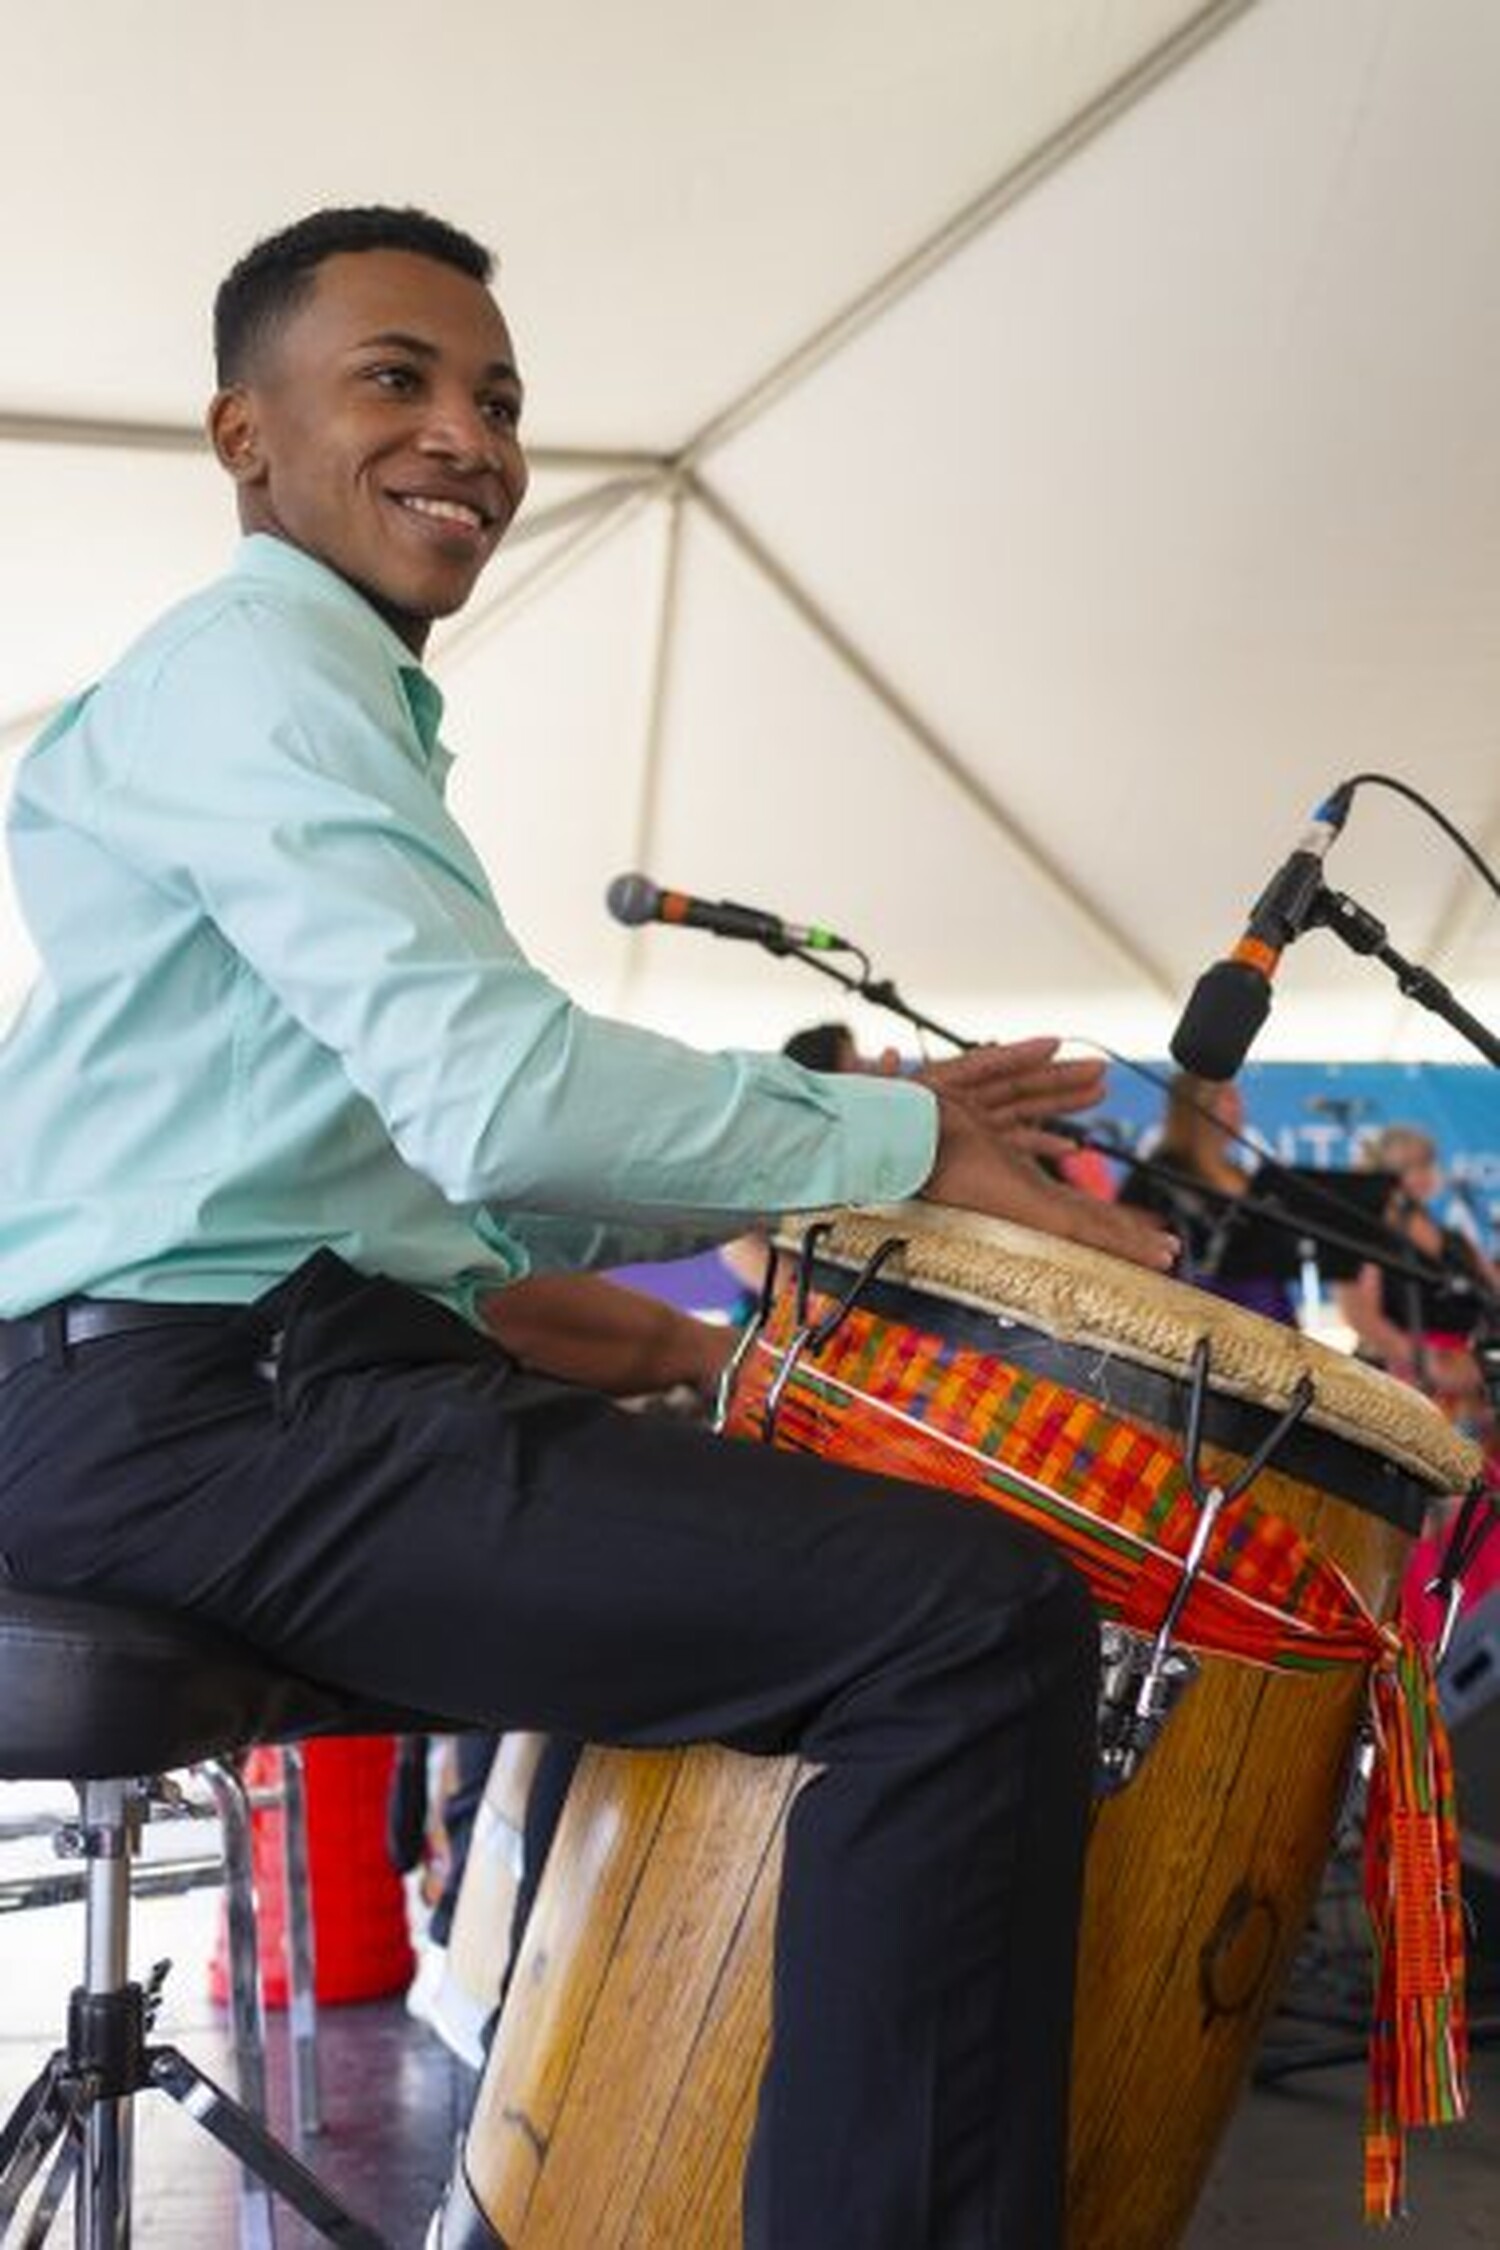 A drummer plays during the Bomba Showcase at the Richmond Folk Festival 2022. Pat Jarrett/Virginia Humanities